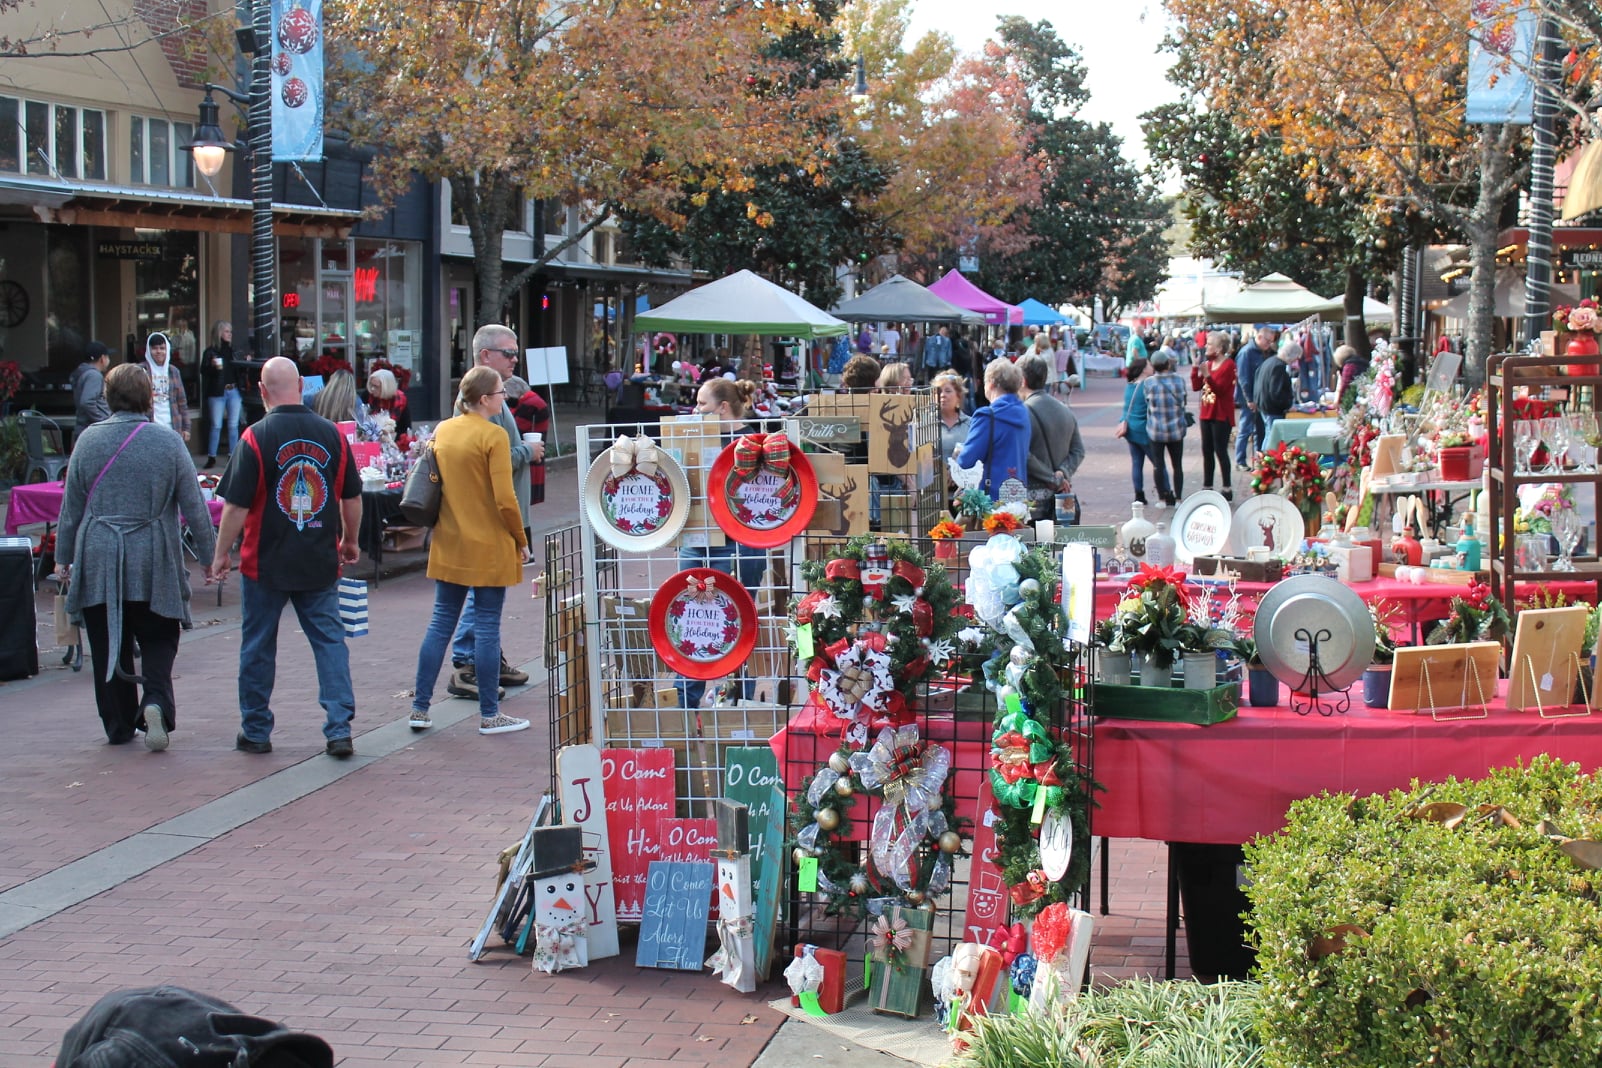 Seventh annual Main Street Christmas Market shows homemade goods